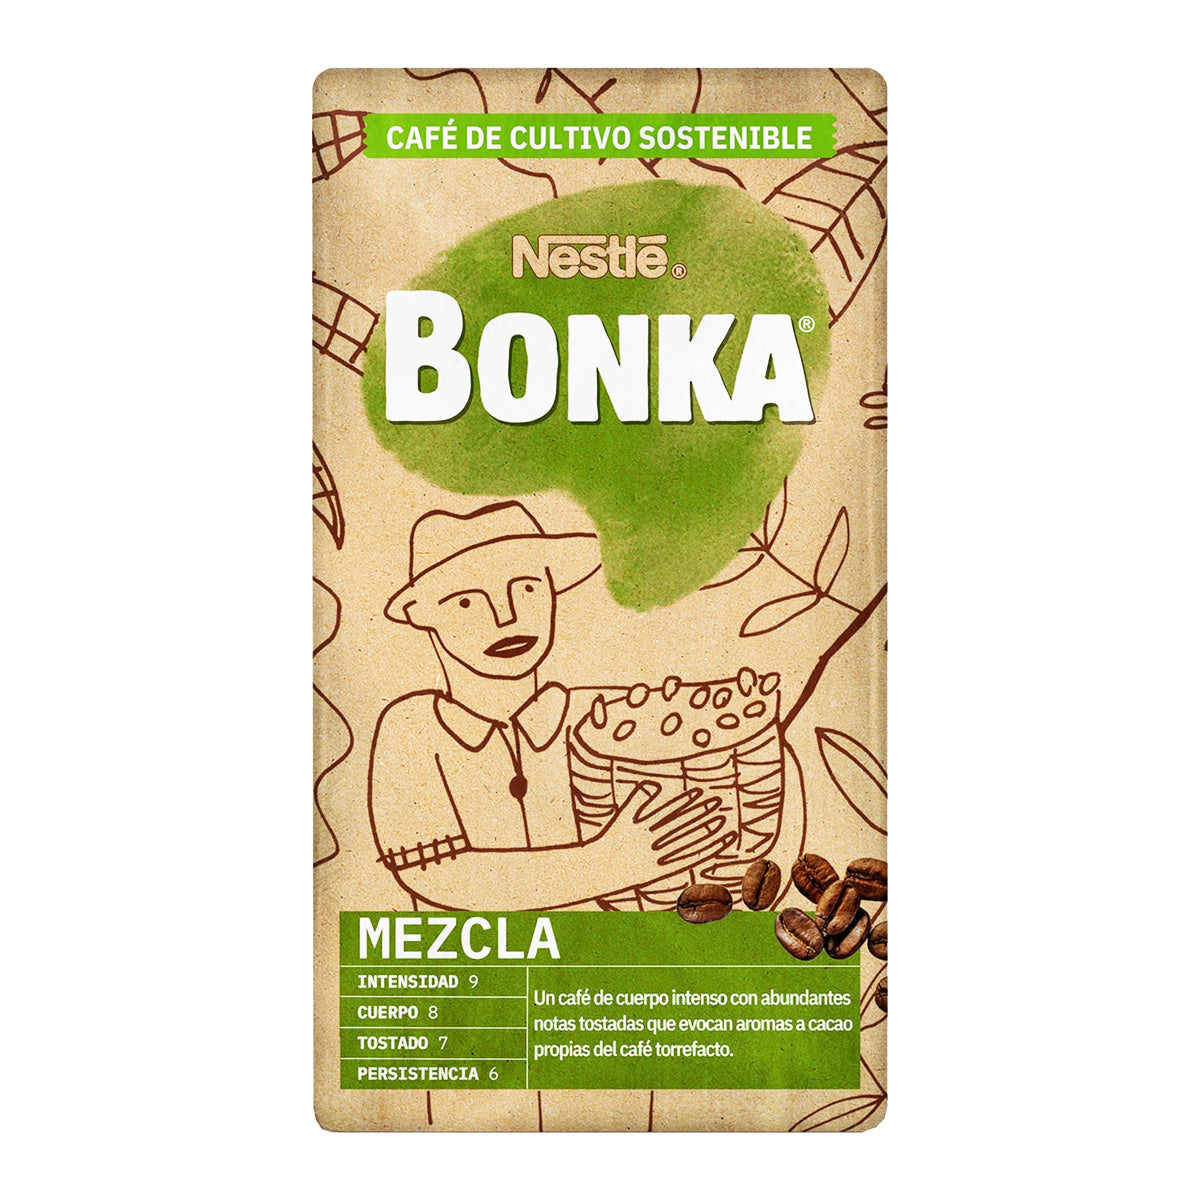 BONKA Café Molido Natural 250 Gr.